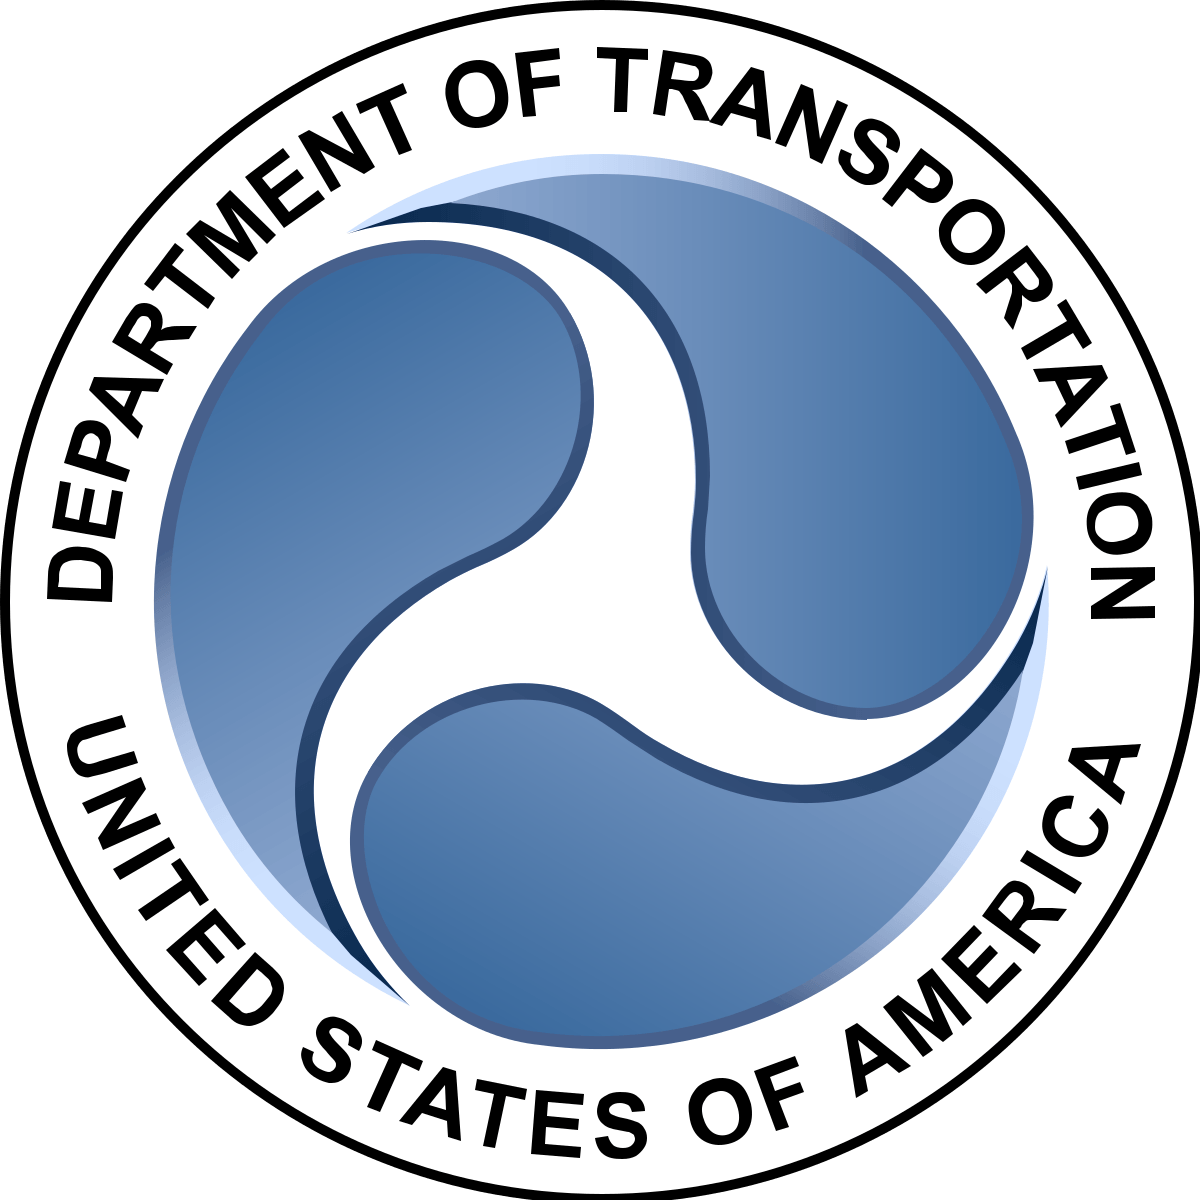 USDOT Logo - United States Department of Transportation